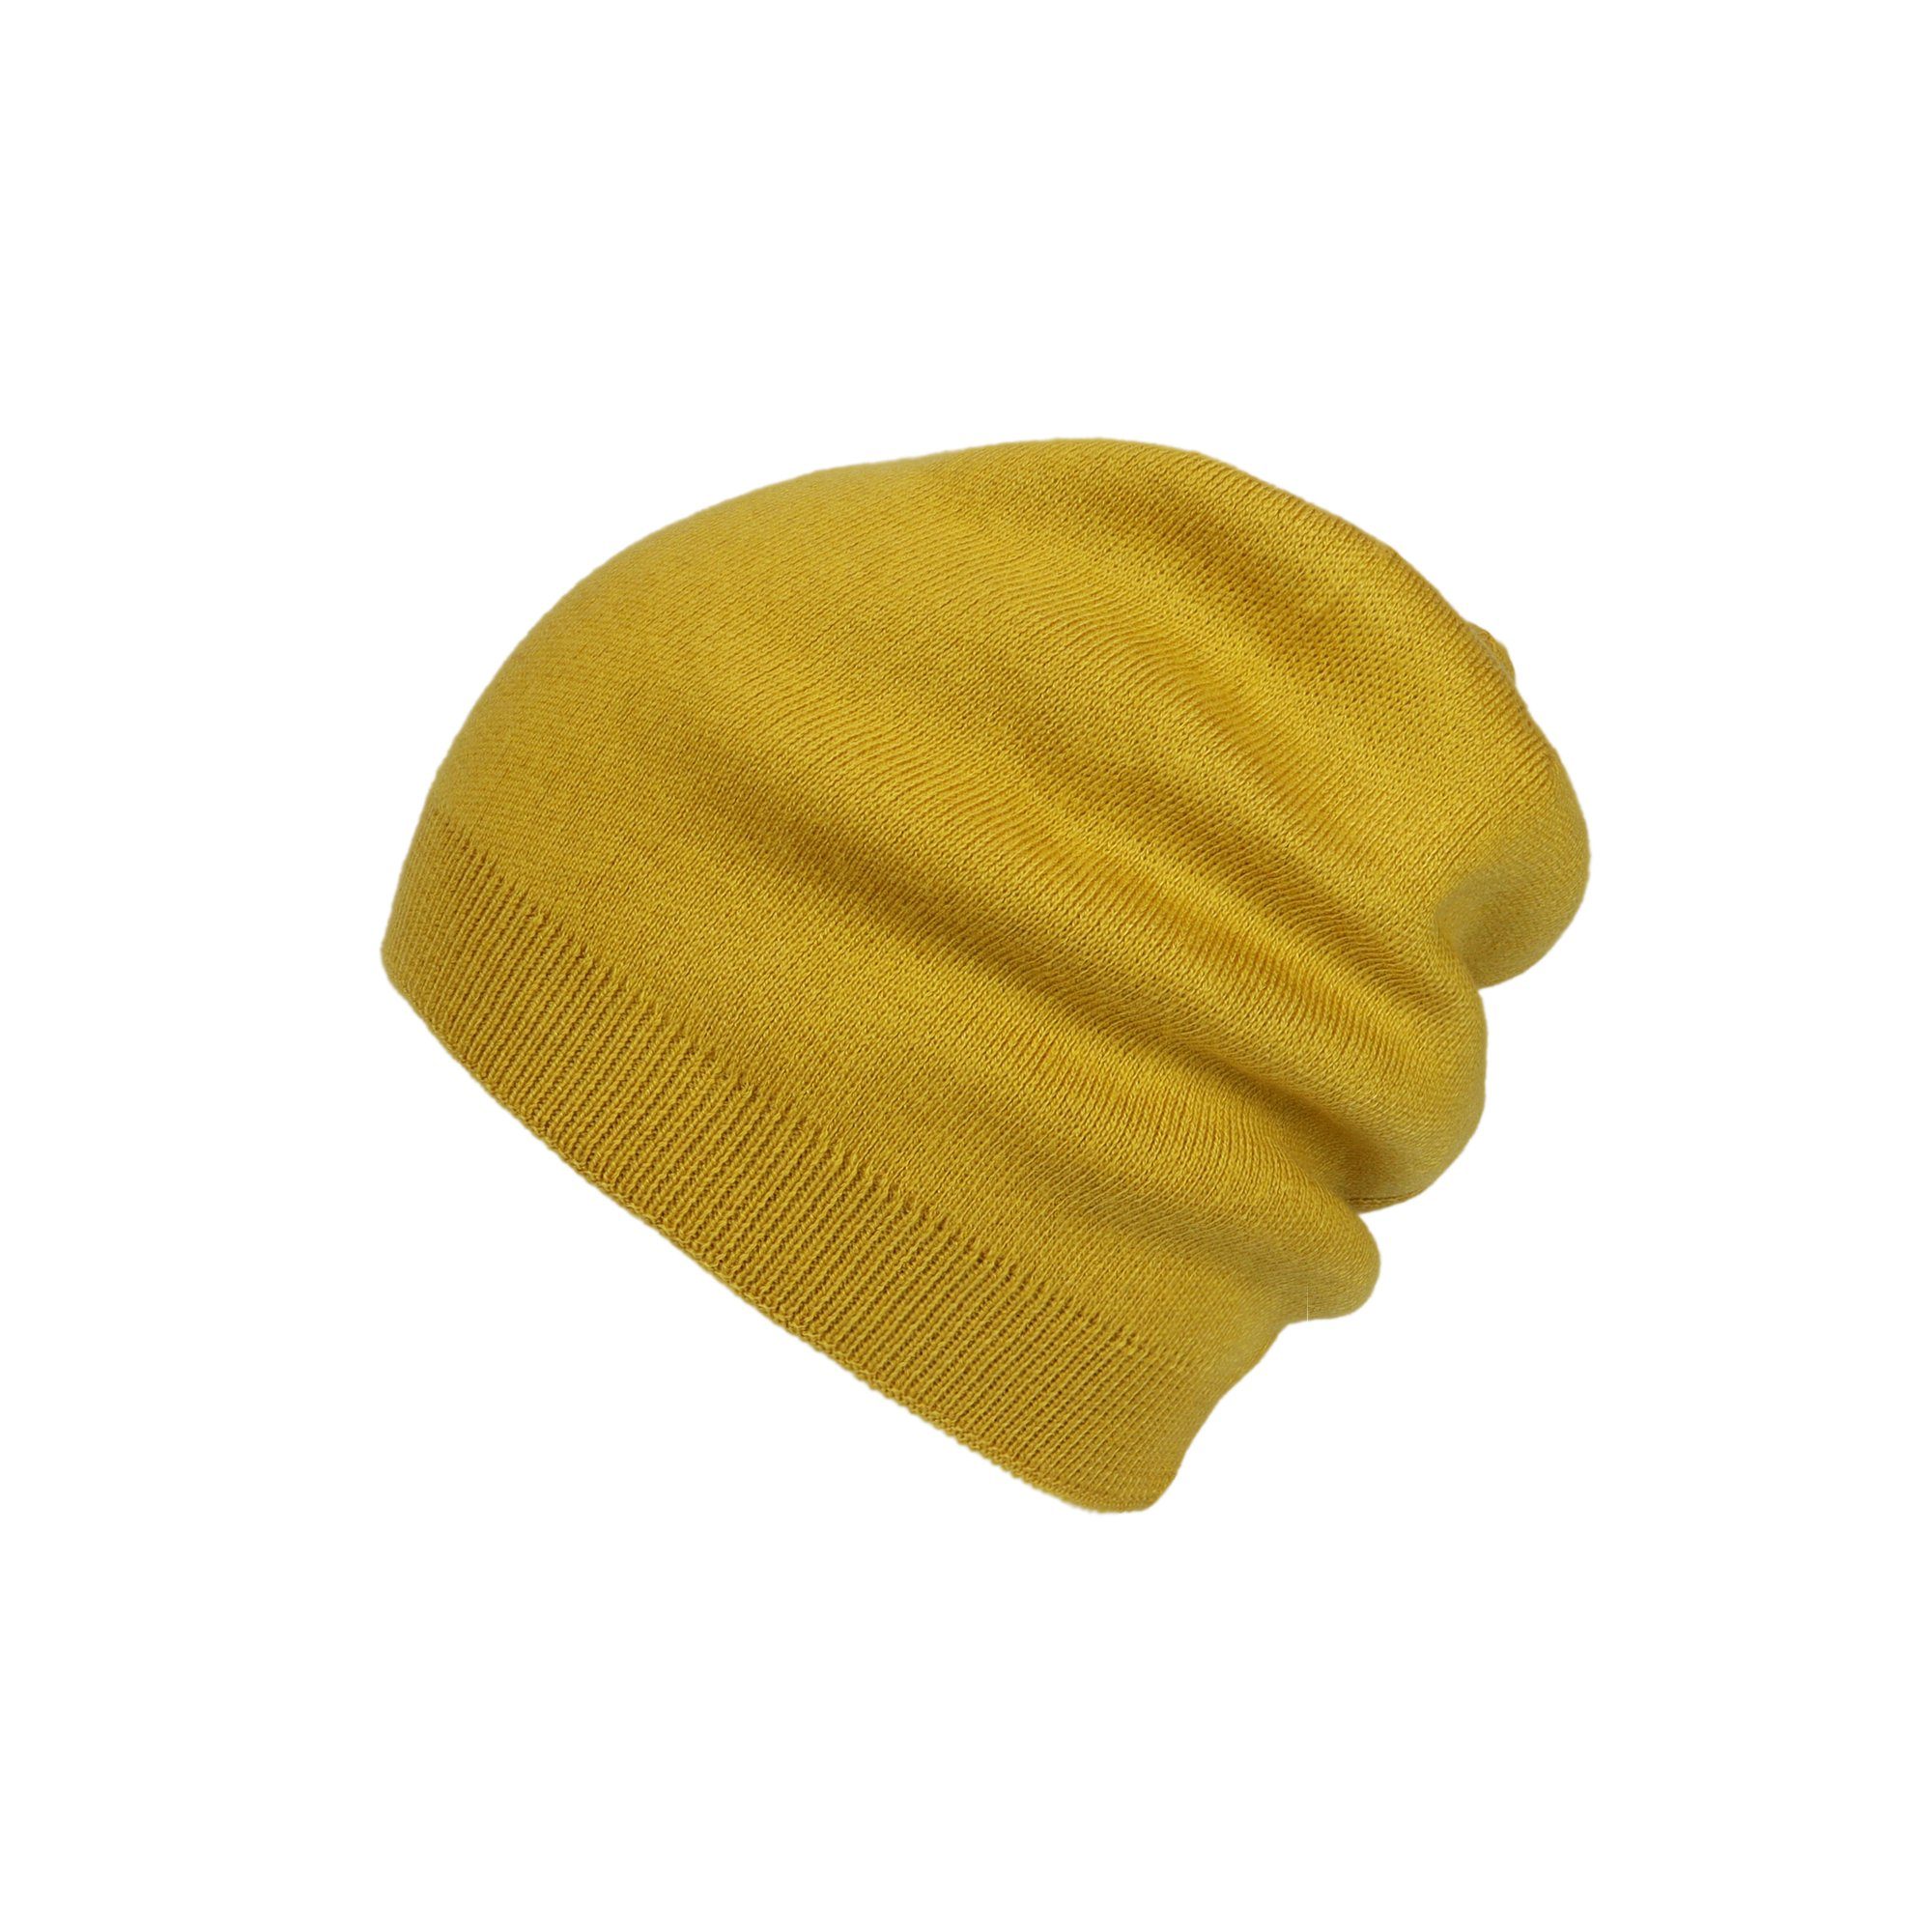 ZEBRO Strickmütze Beanie Mütze gelb